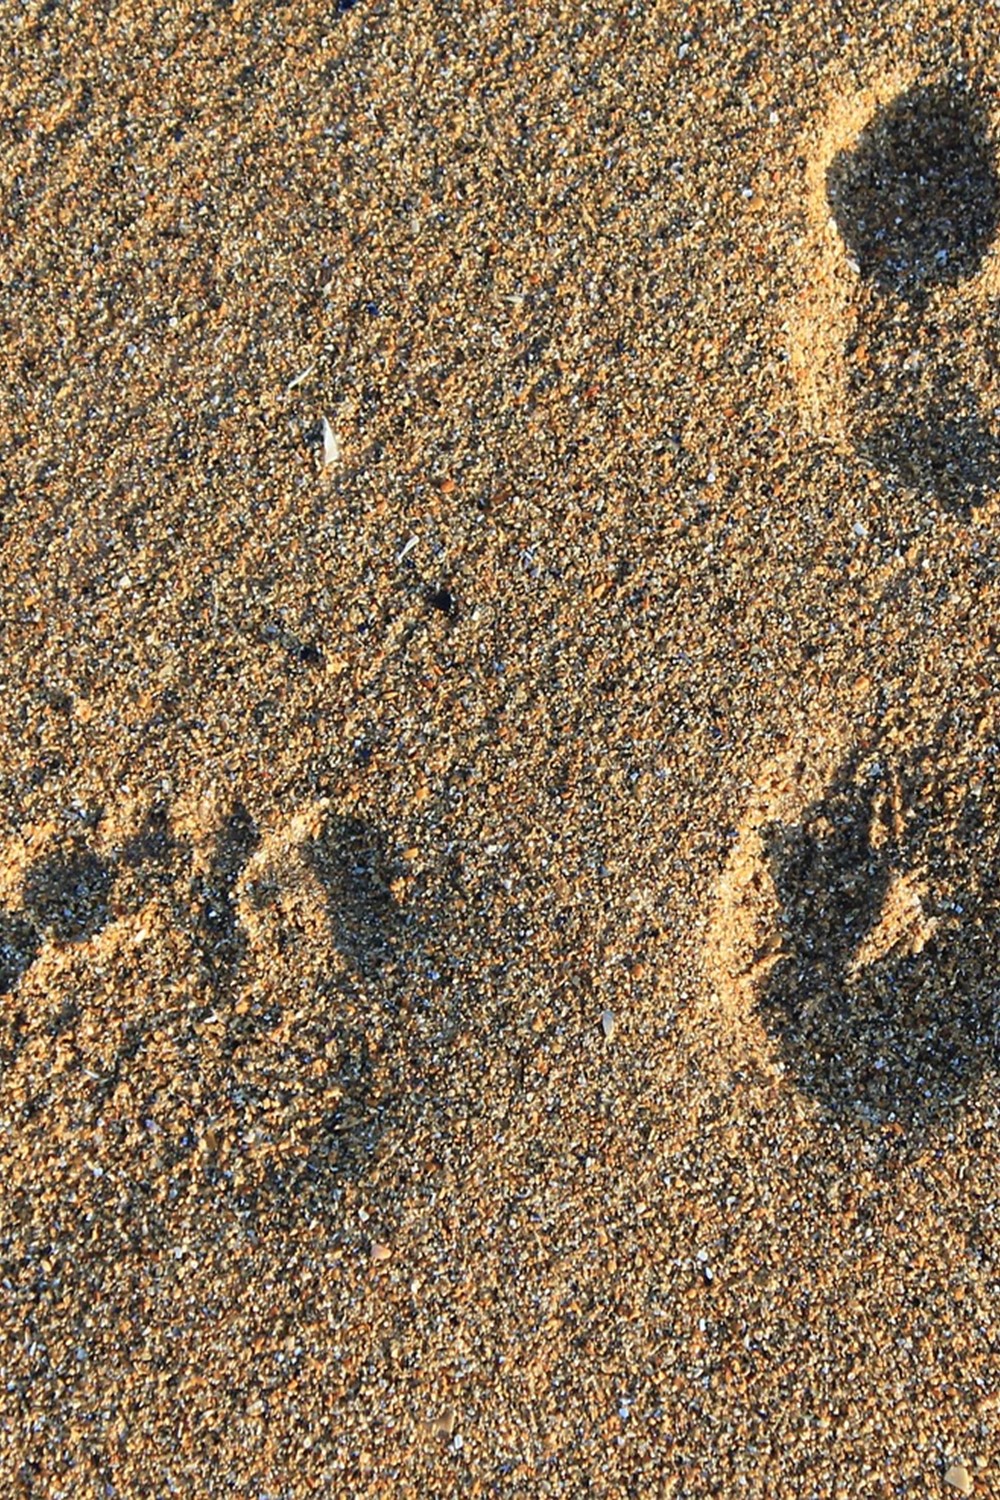 footprint-g7972ca478_1920.jpg